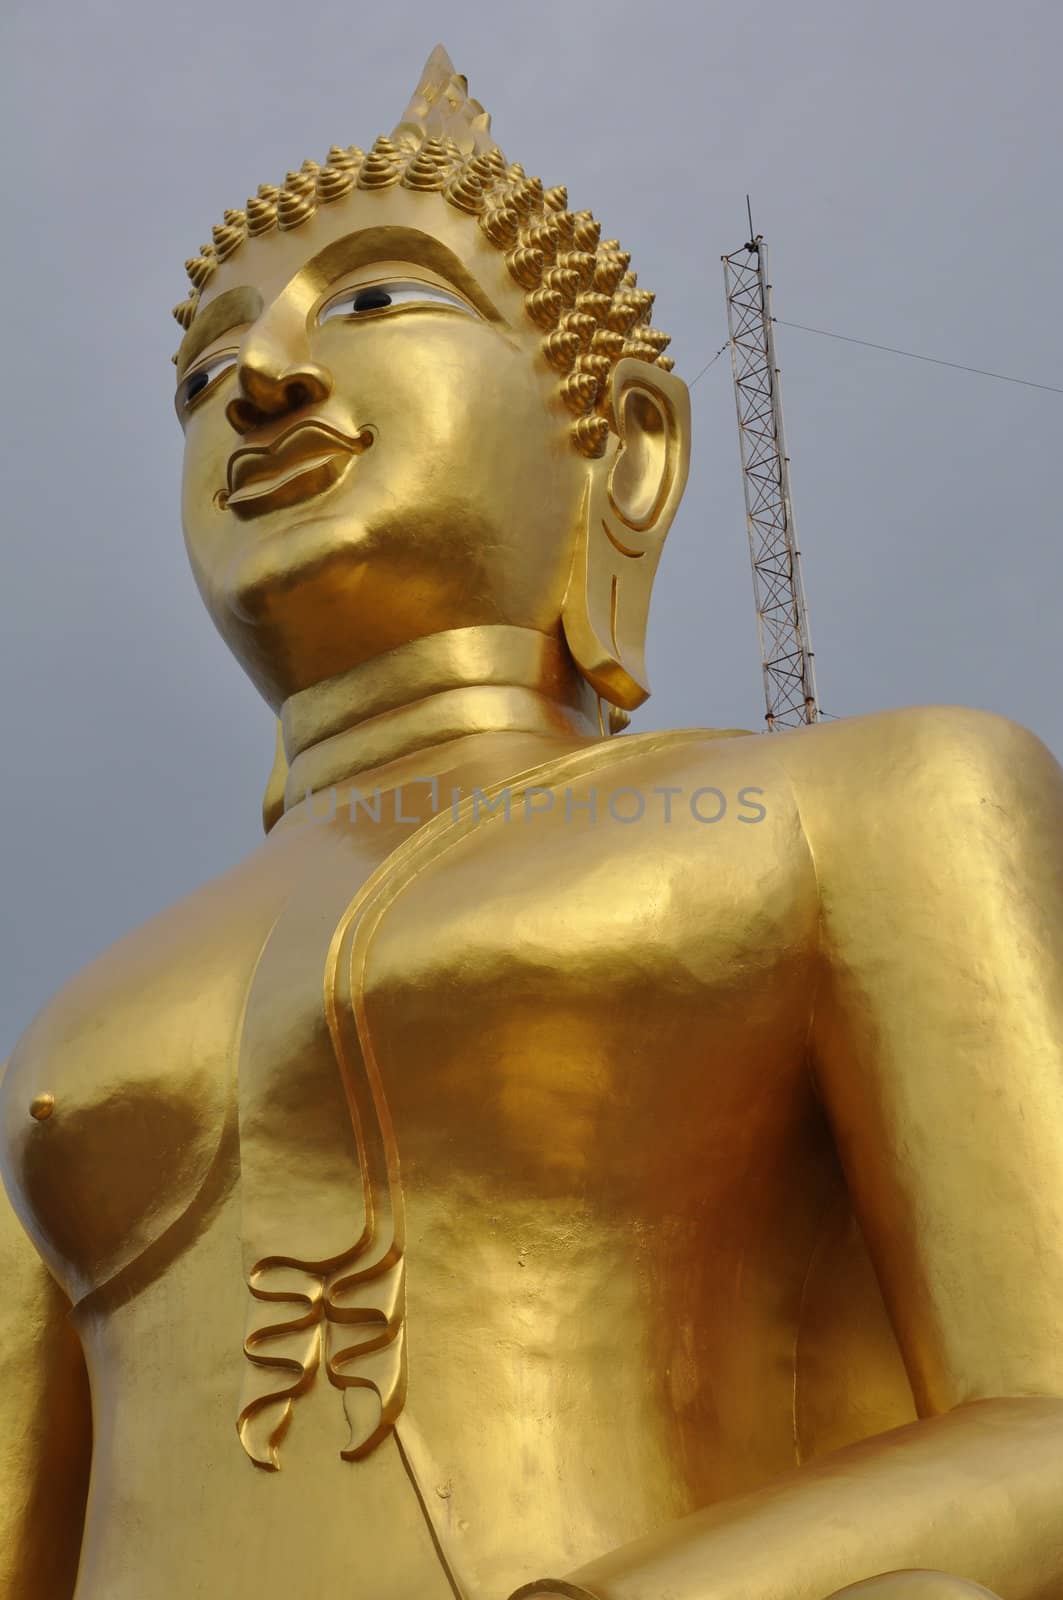 The site of Big Buddha in Pattaya, Thailand